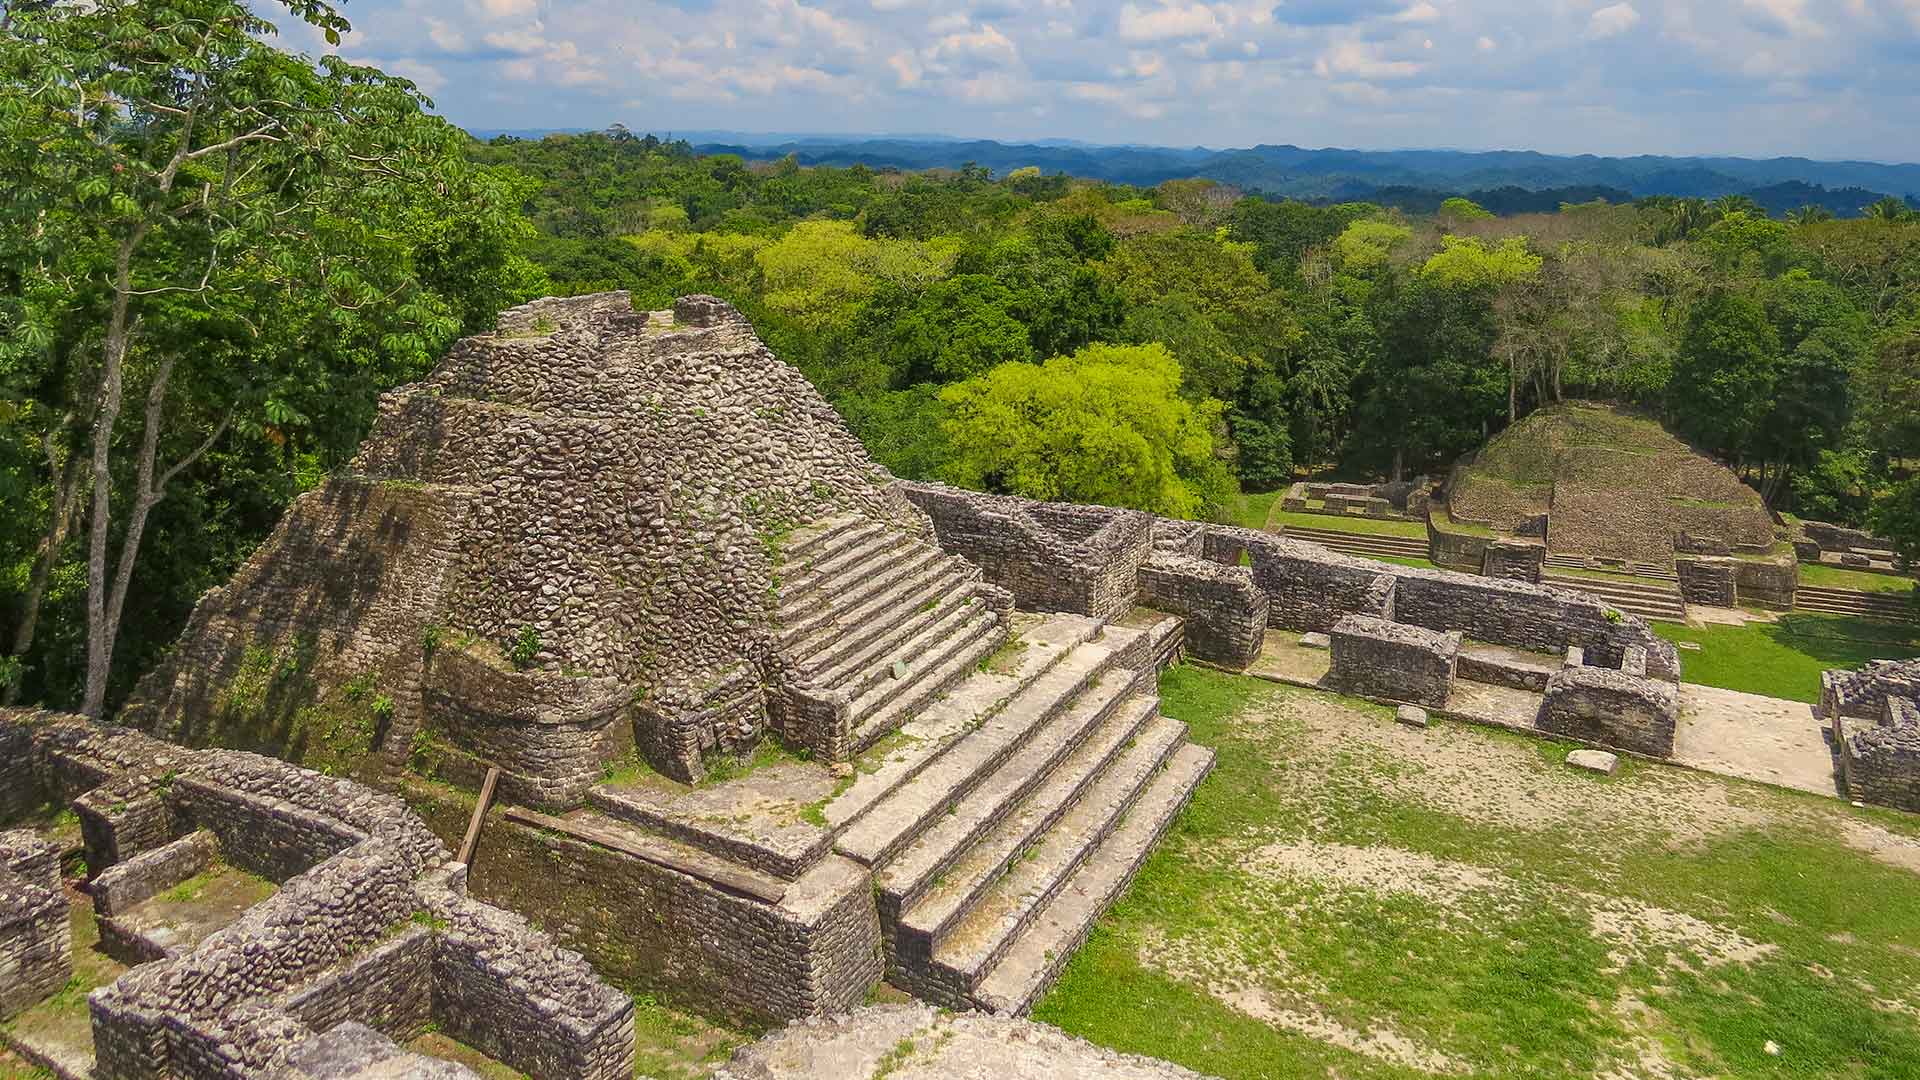 Panoramic view from atop the Caana Pyramid at Caracol Maya Ruins, showcasing the ancient structures and lush Belizean jungle below.